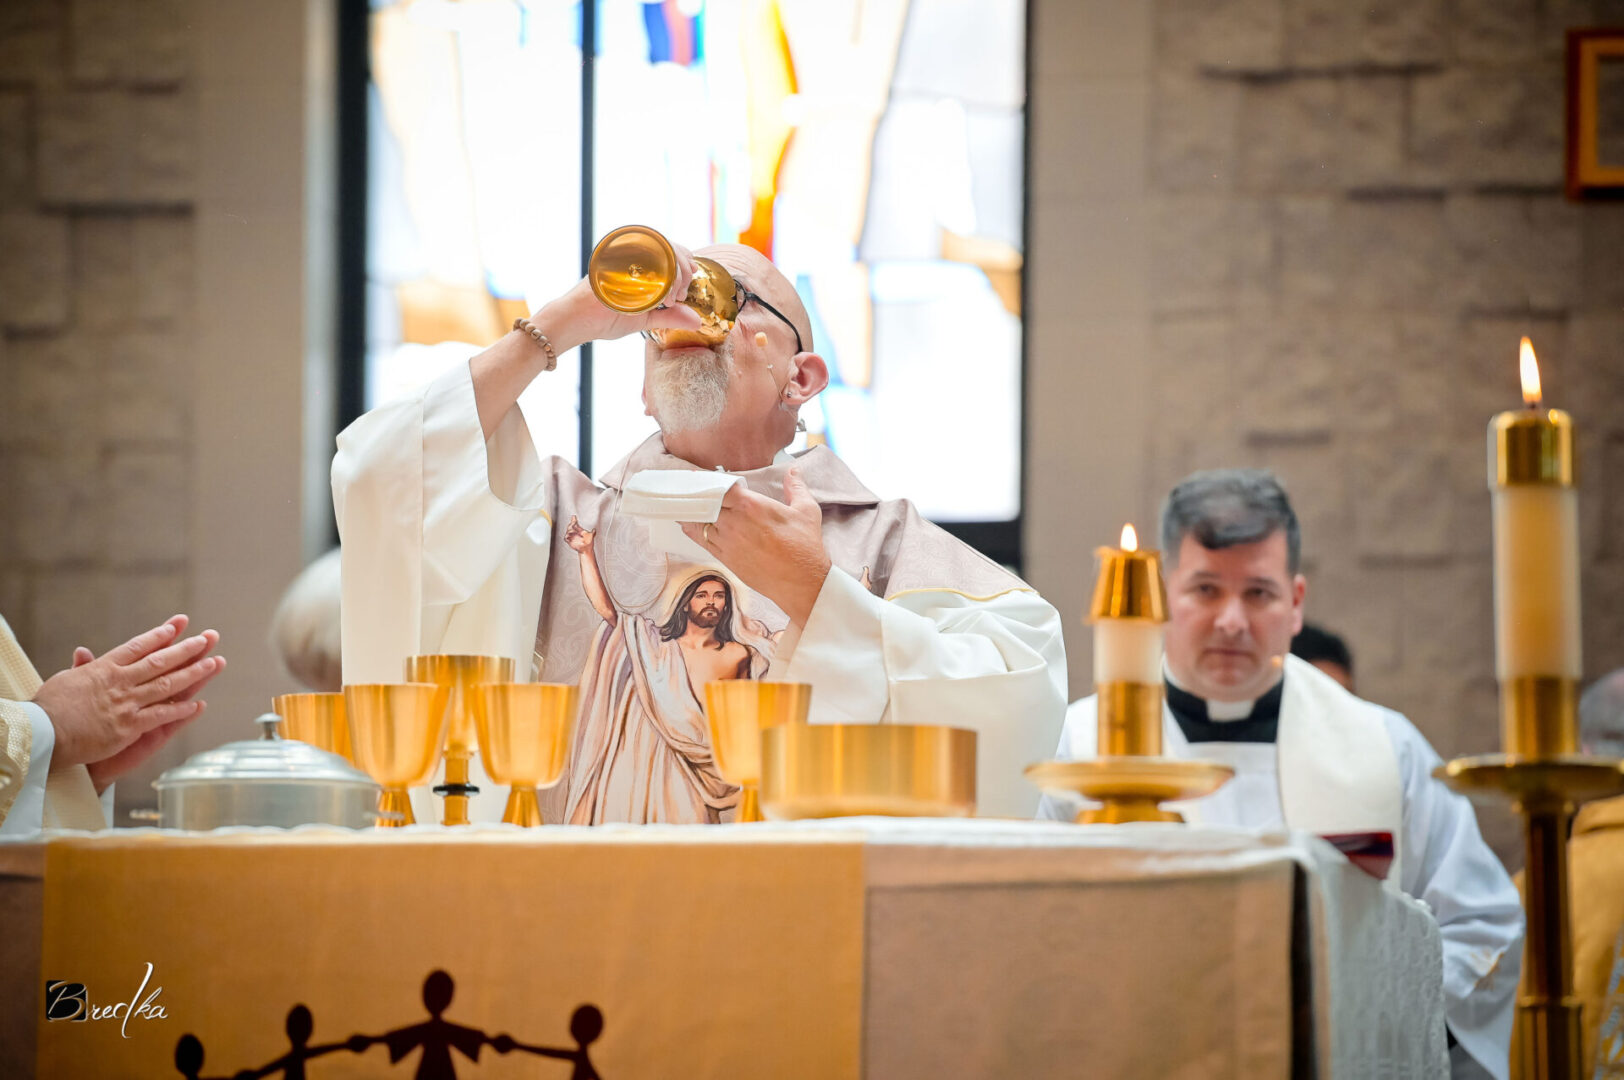 Priest drinking wine during communion service.